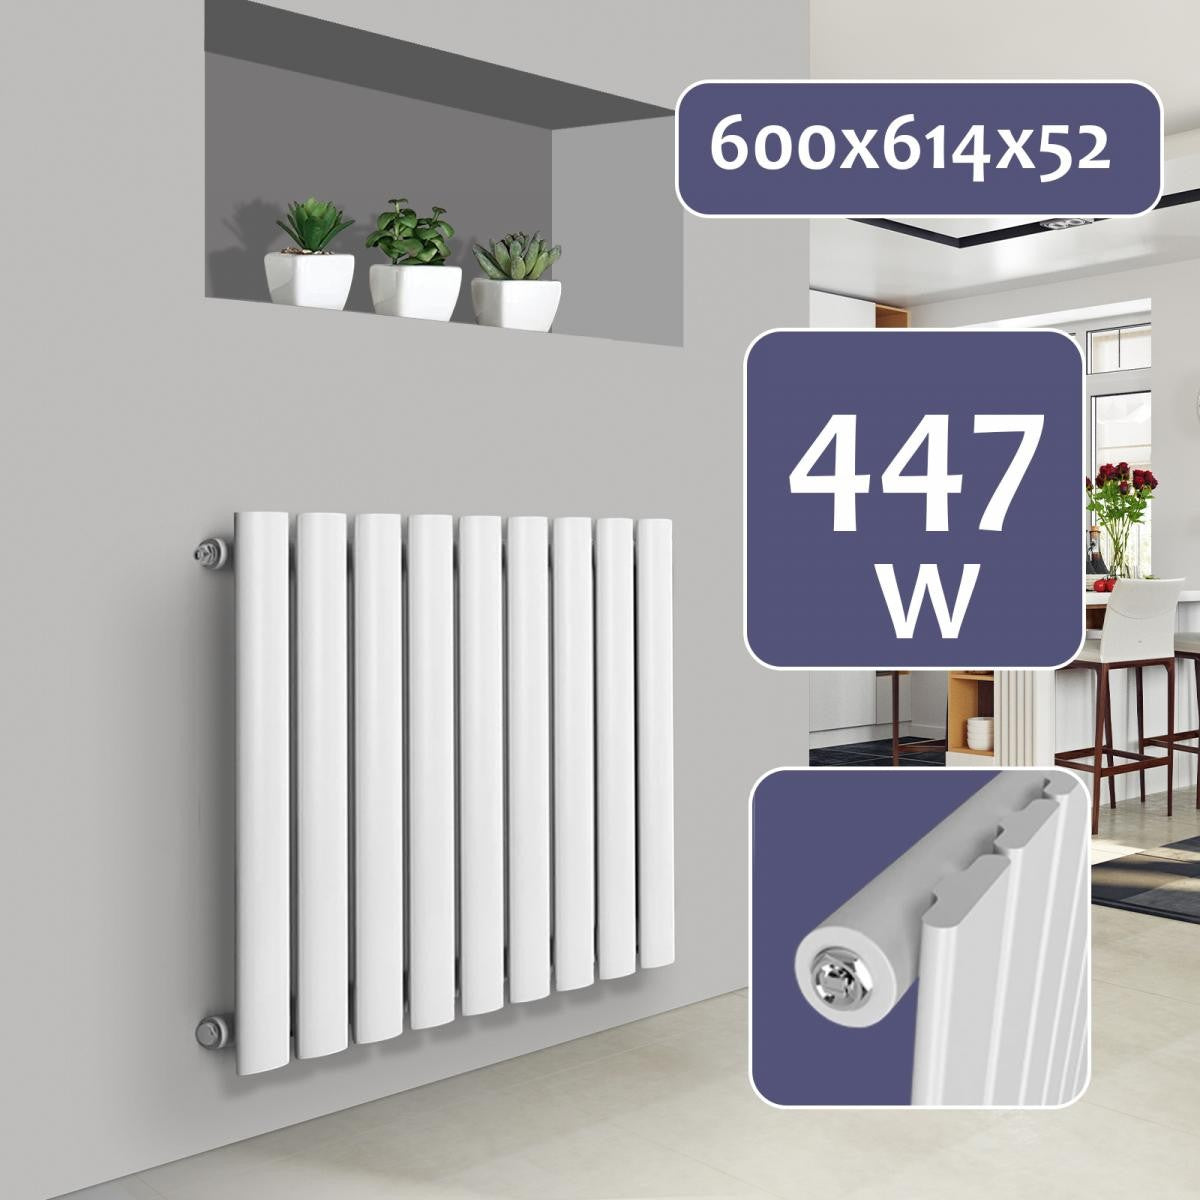 4: AquamarineÂ® radiator - vandret, enkeltlag, 9 segmenter, 600x614x52 mm, centralvarme, hvid